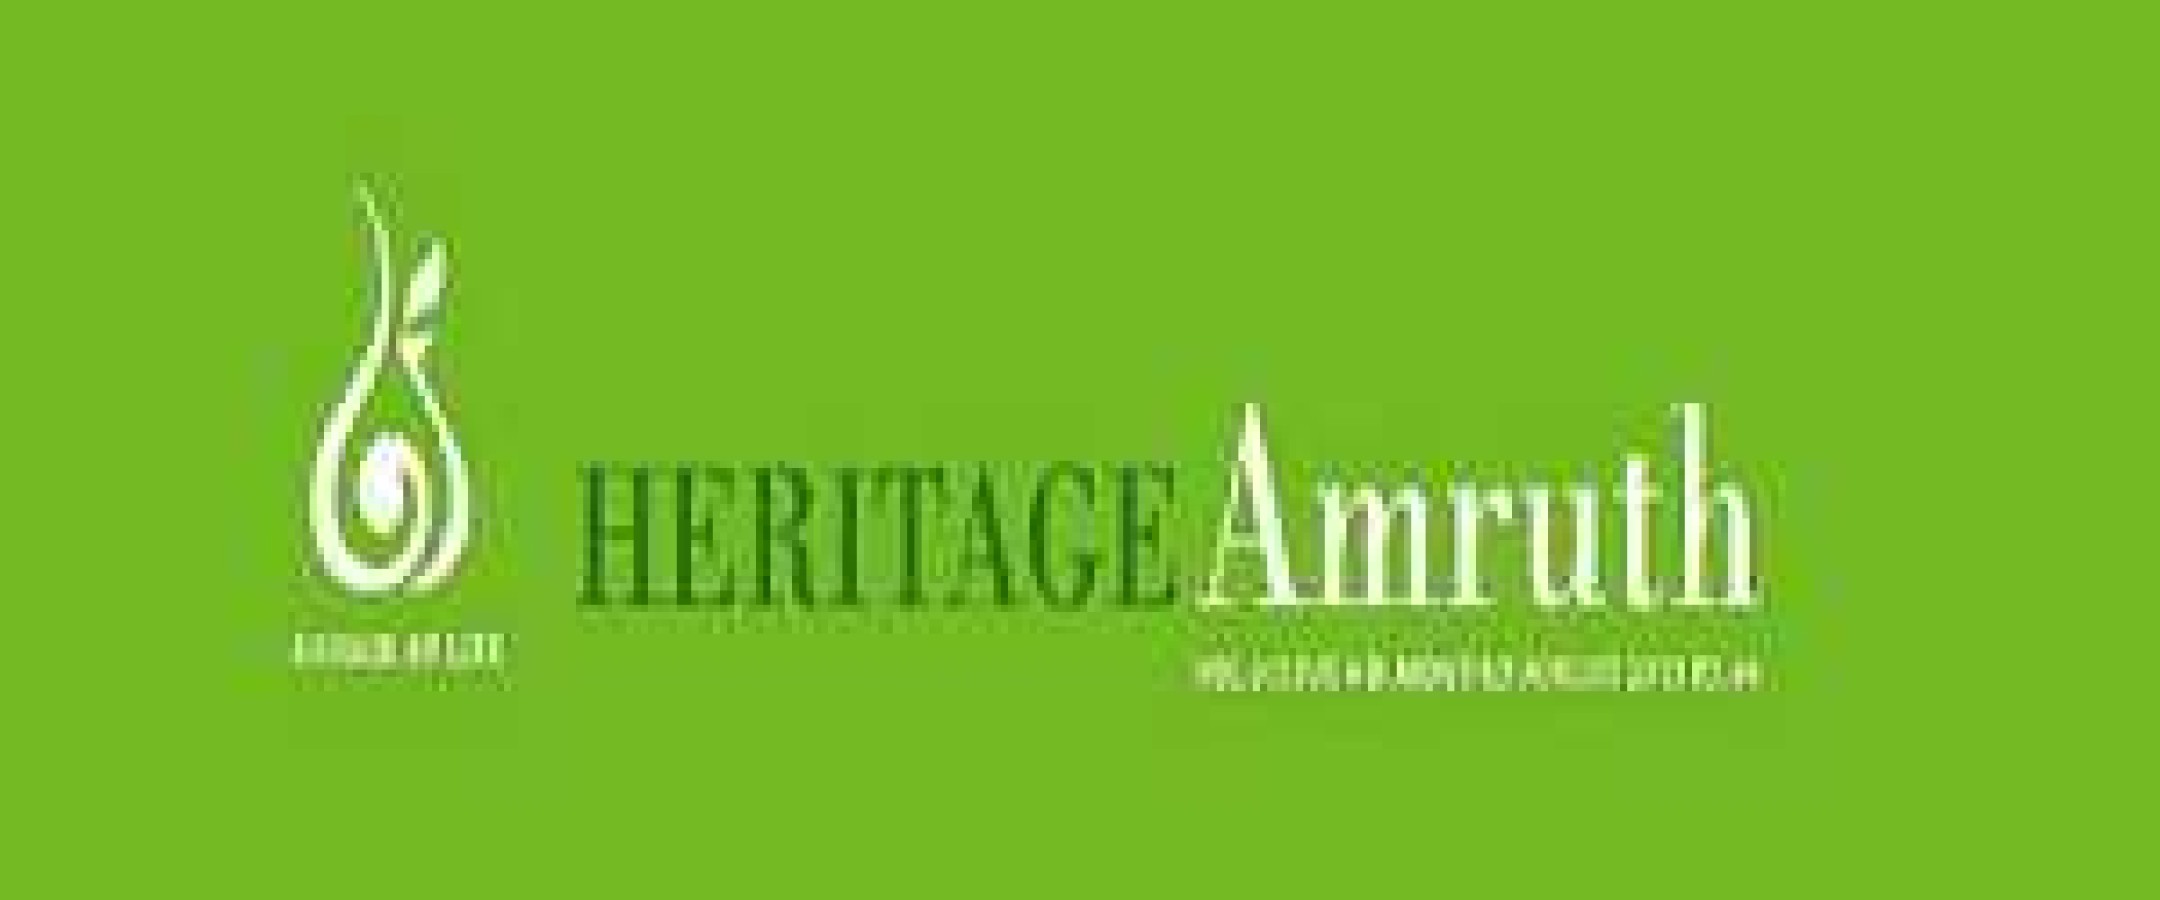 Magazine Media Heritage Amruth Advertising in India